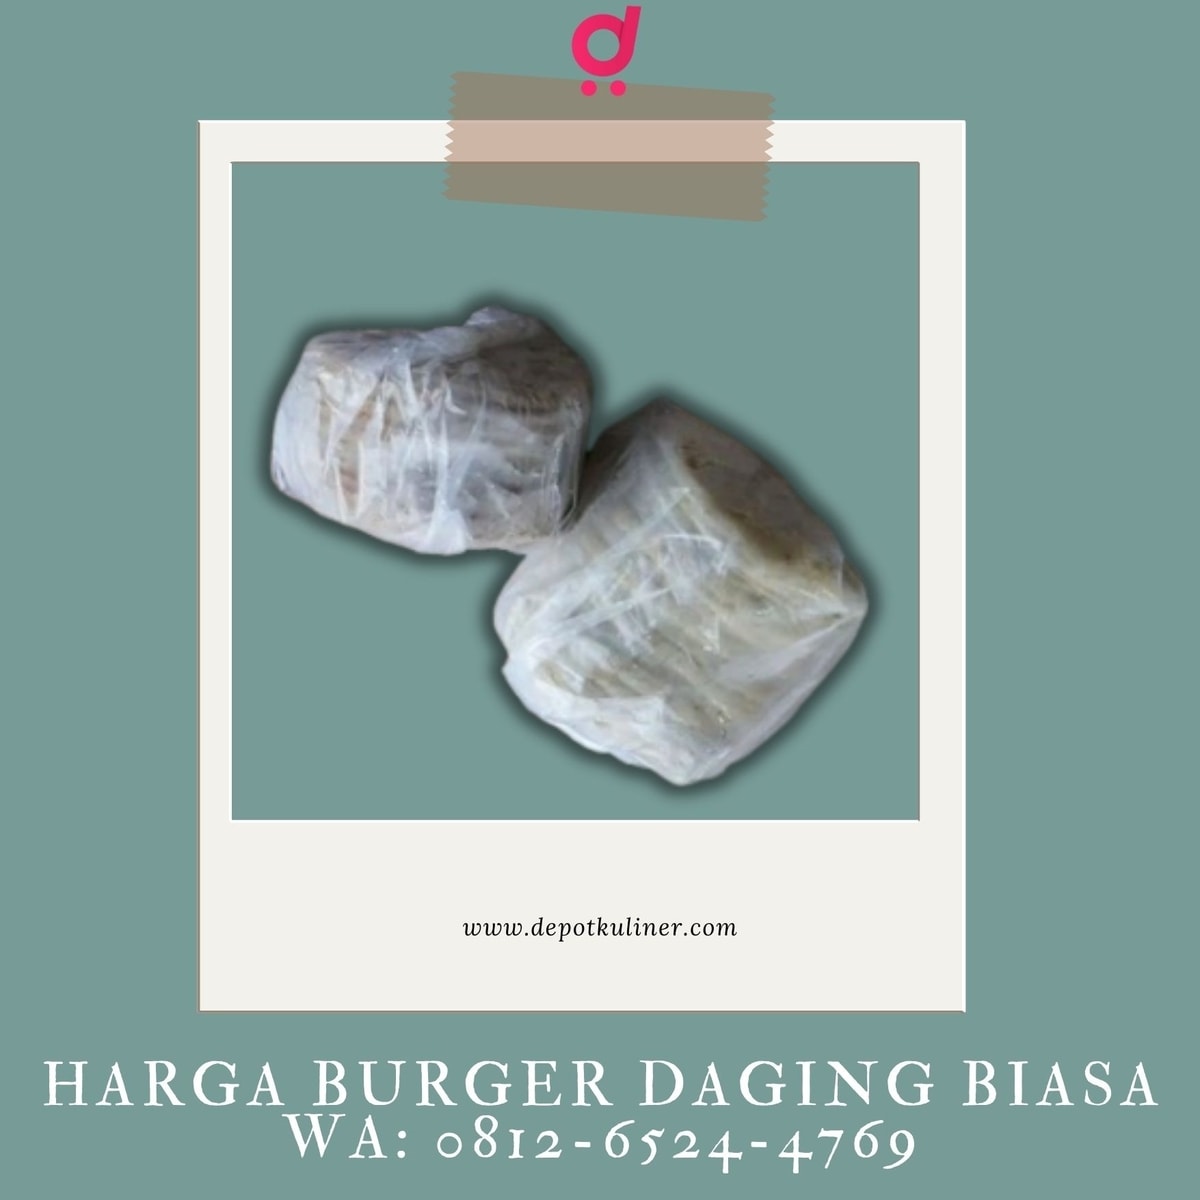 HARGA PROMOSI, Call 0812-6524-4769, Harga Burger Daging Biasa